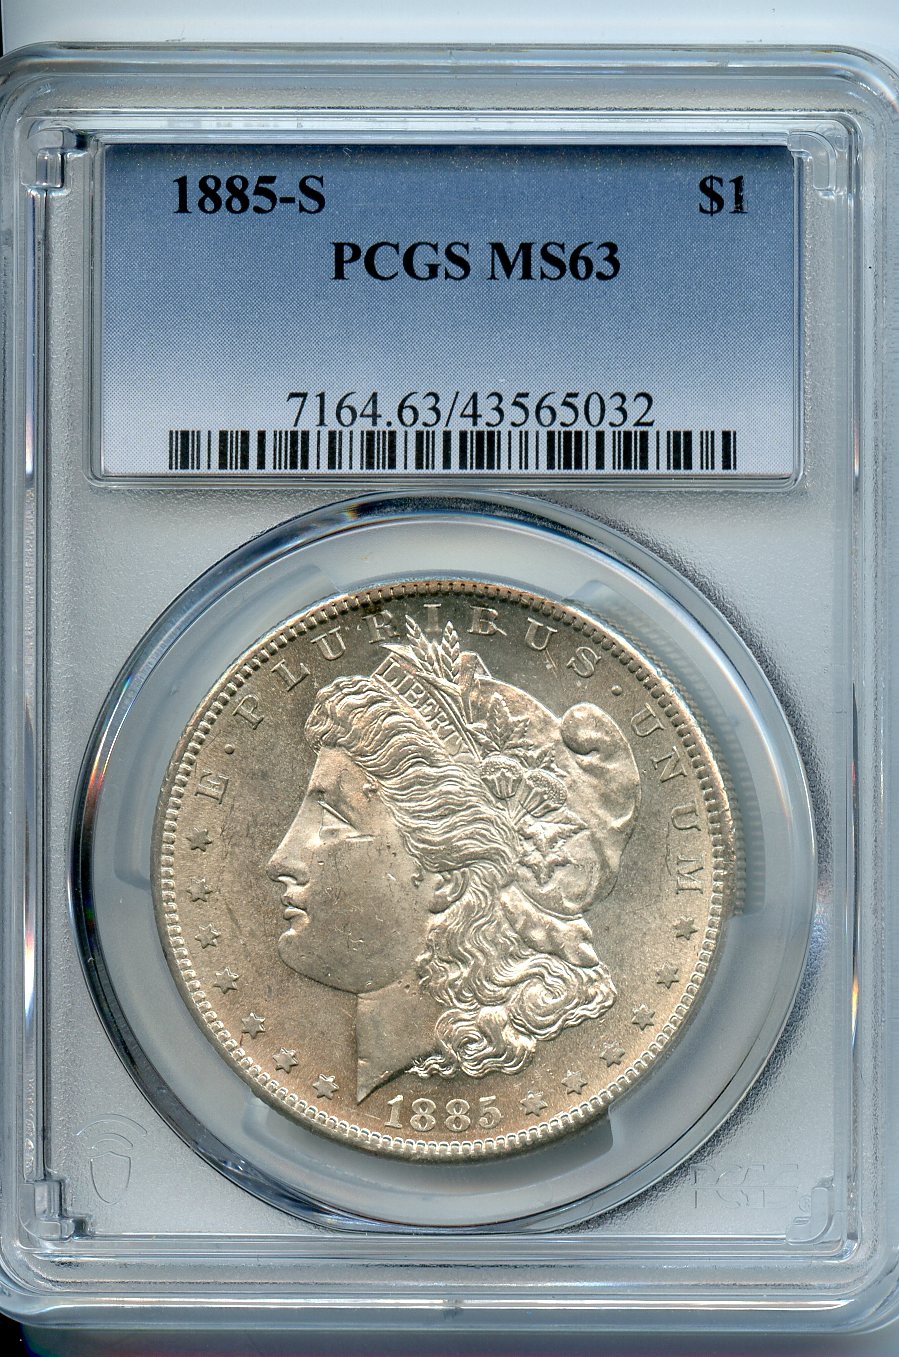 1885 S  $1  PCGS  MS63  Morgan Dollar